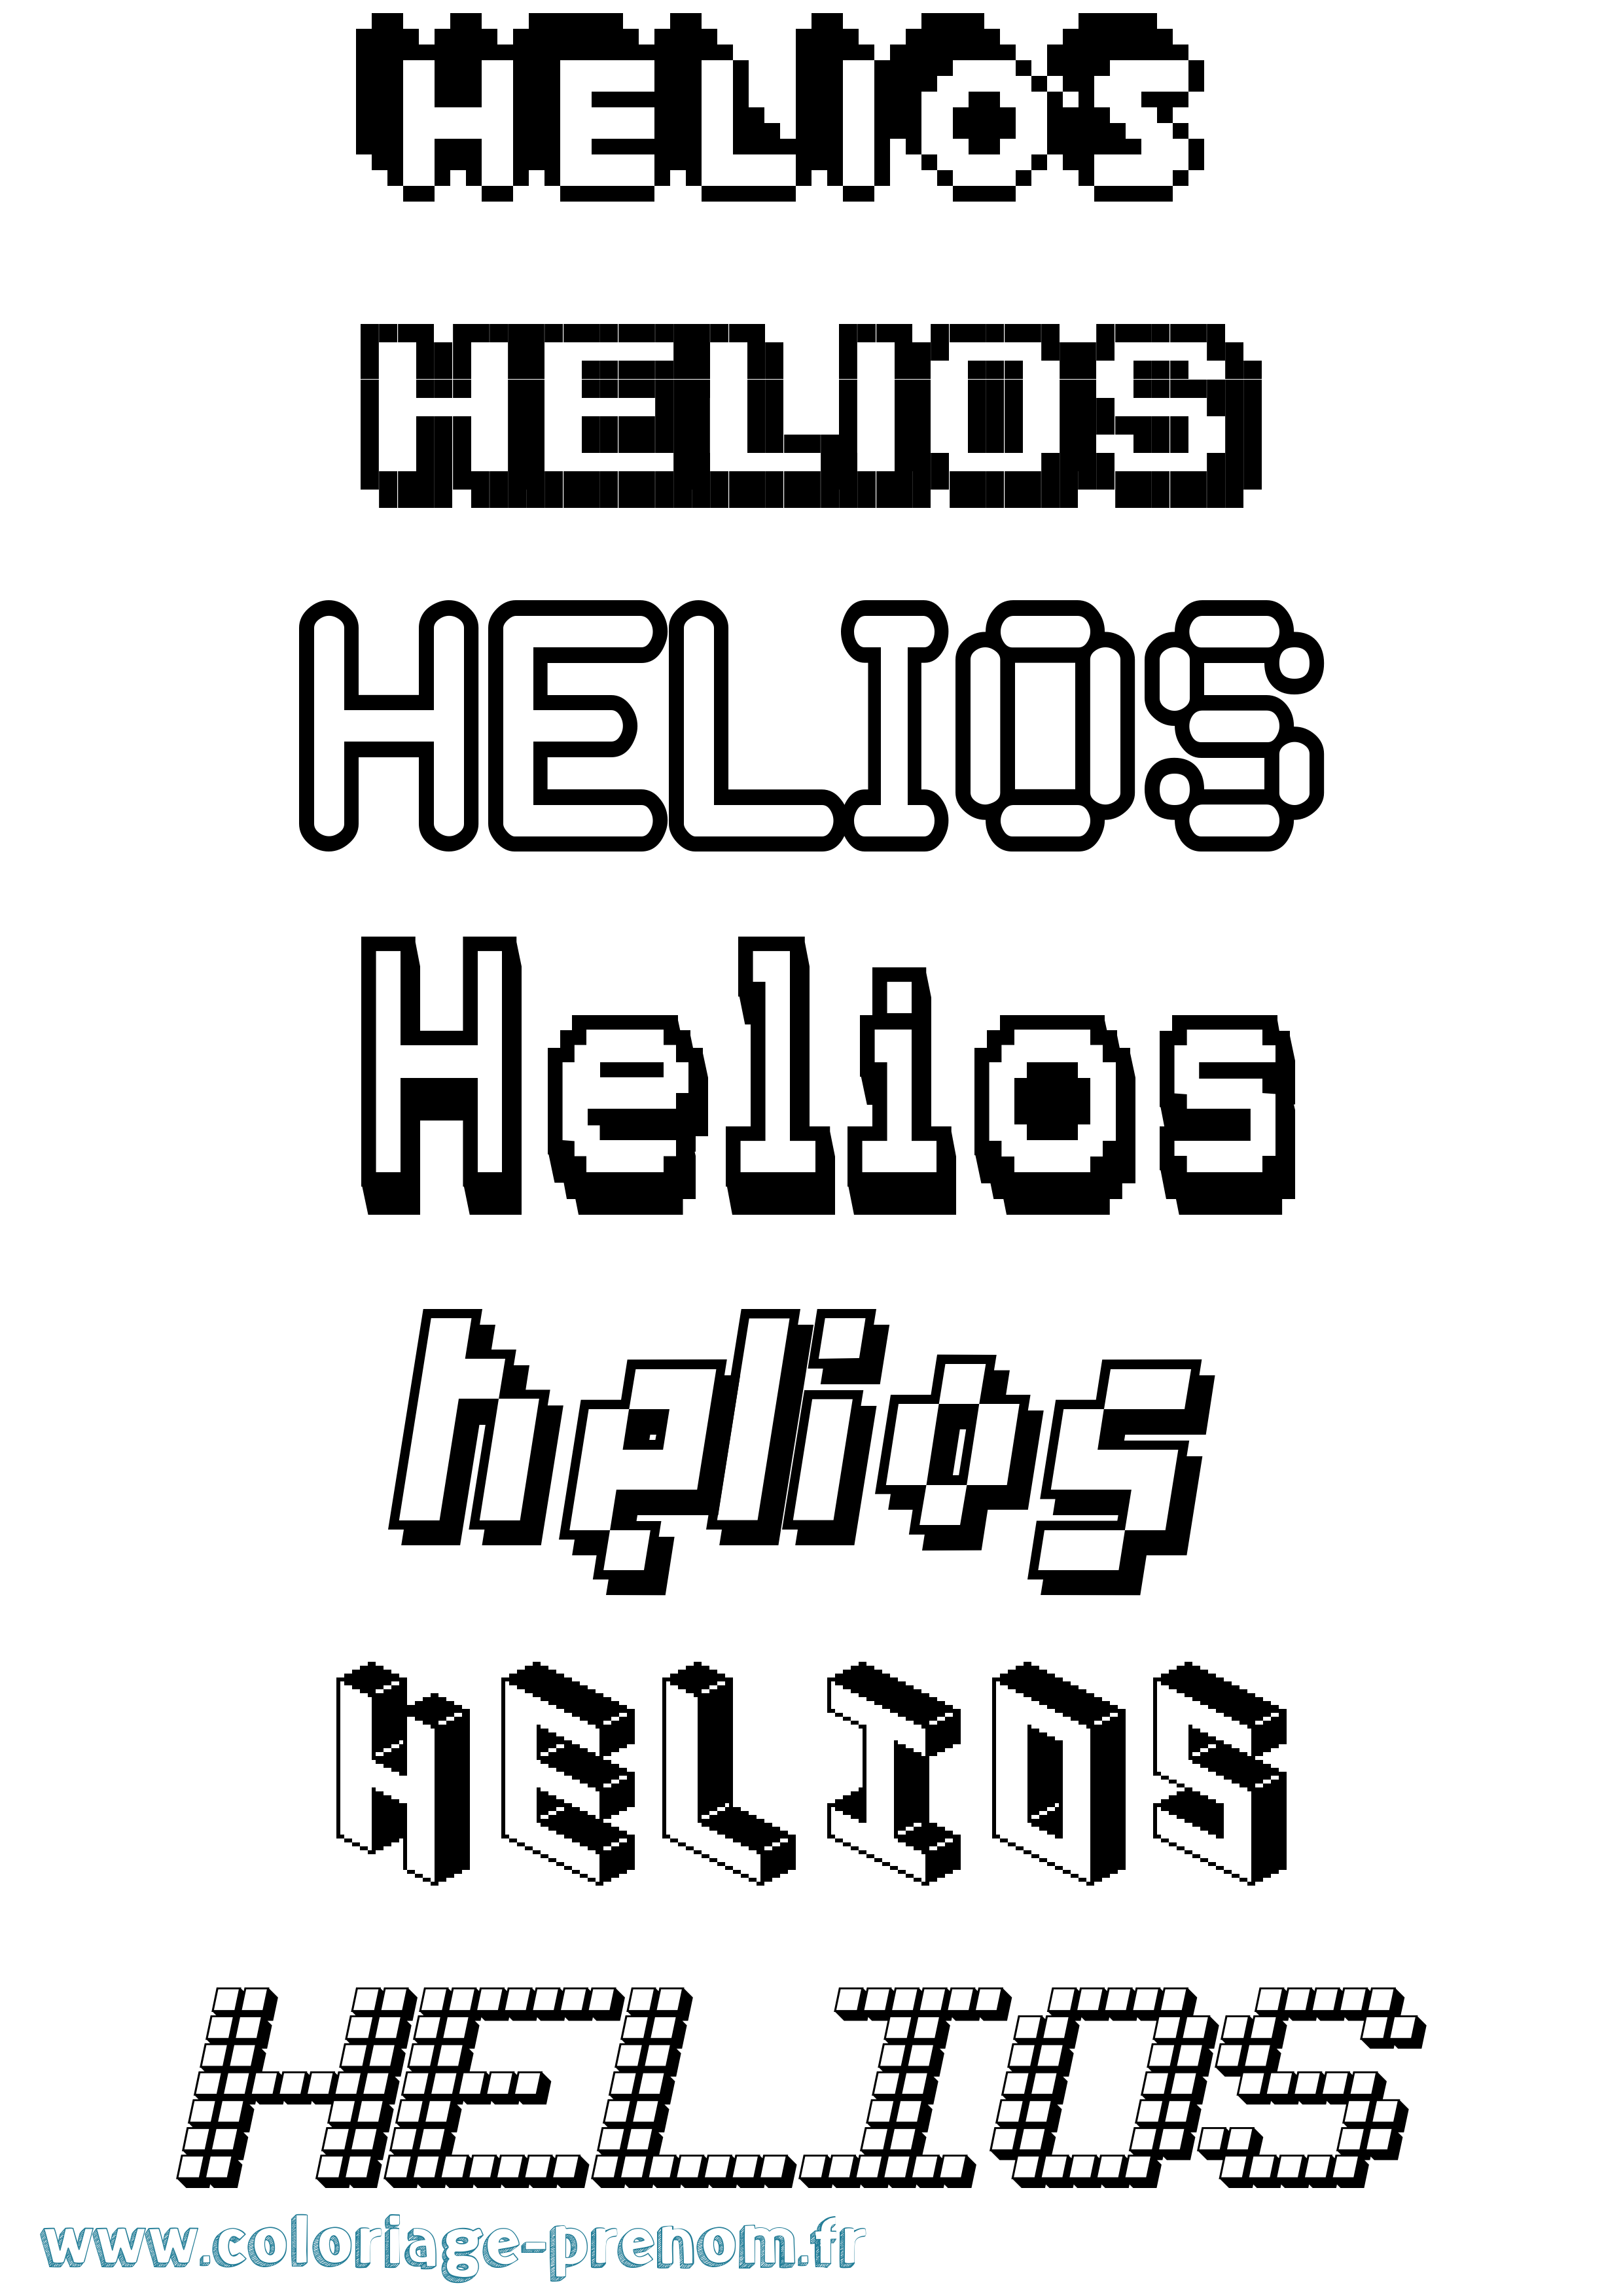 Coloriage prénom Helios Pixel